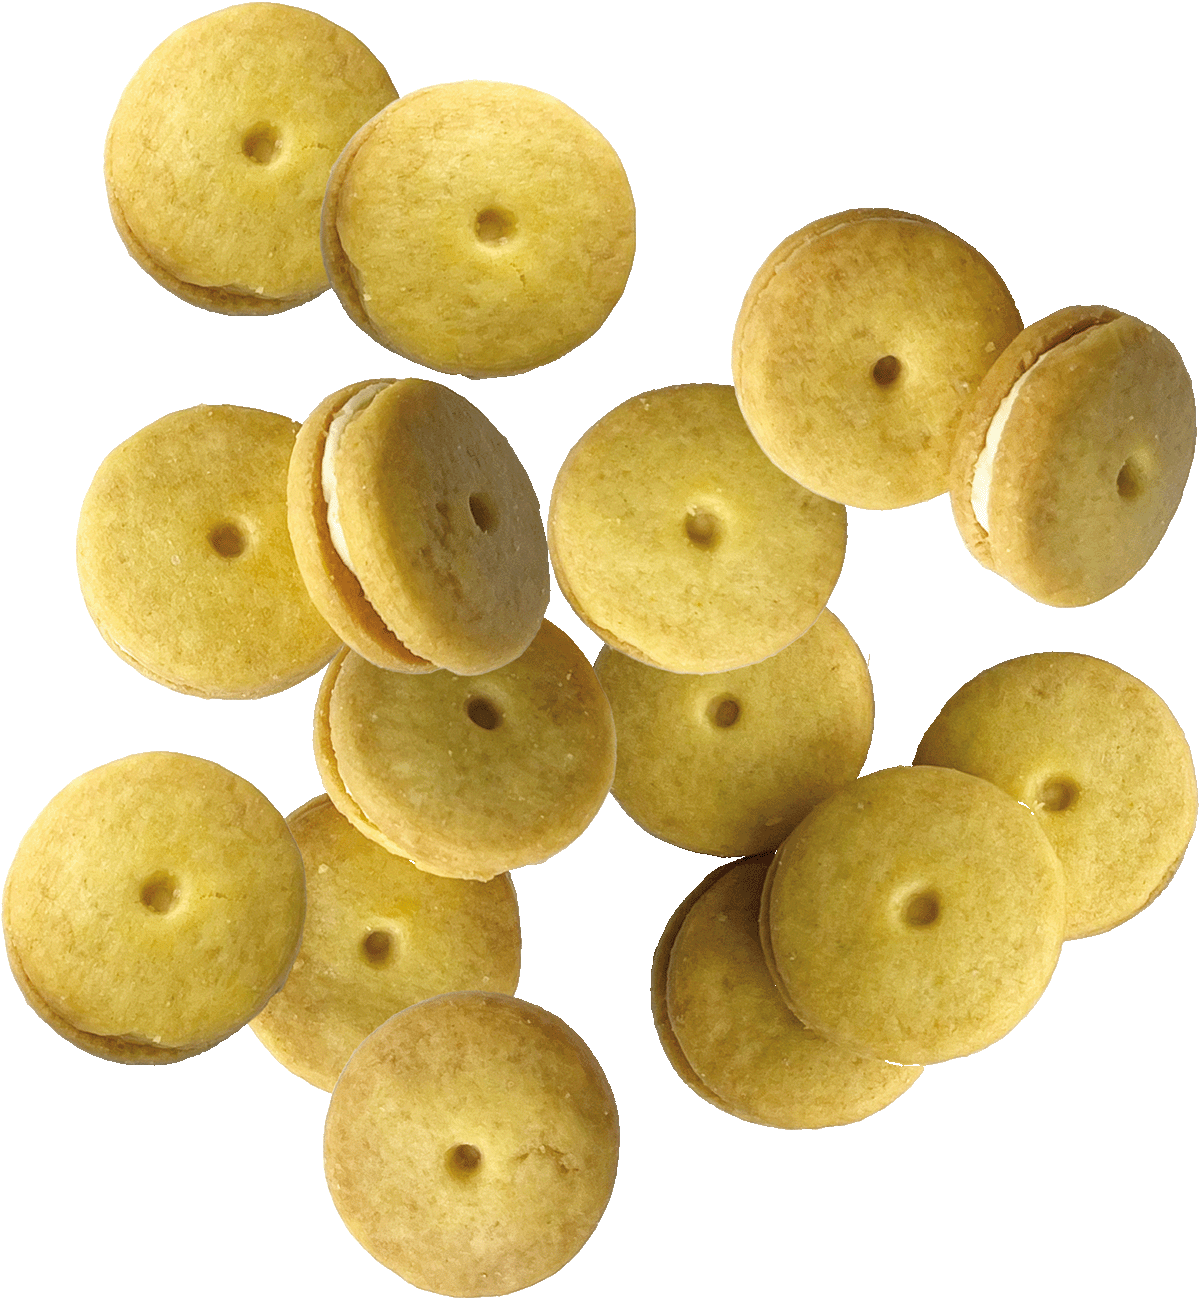 Mini bagels – Sandwich crackers